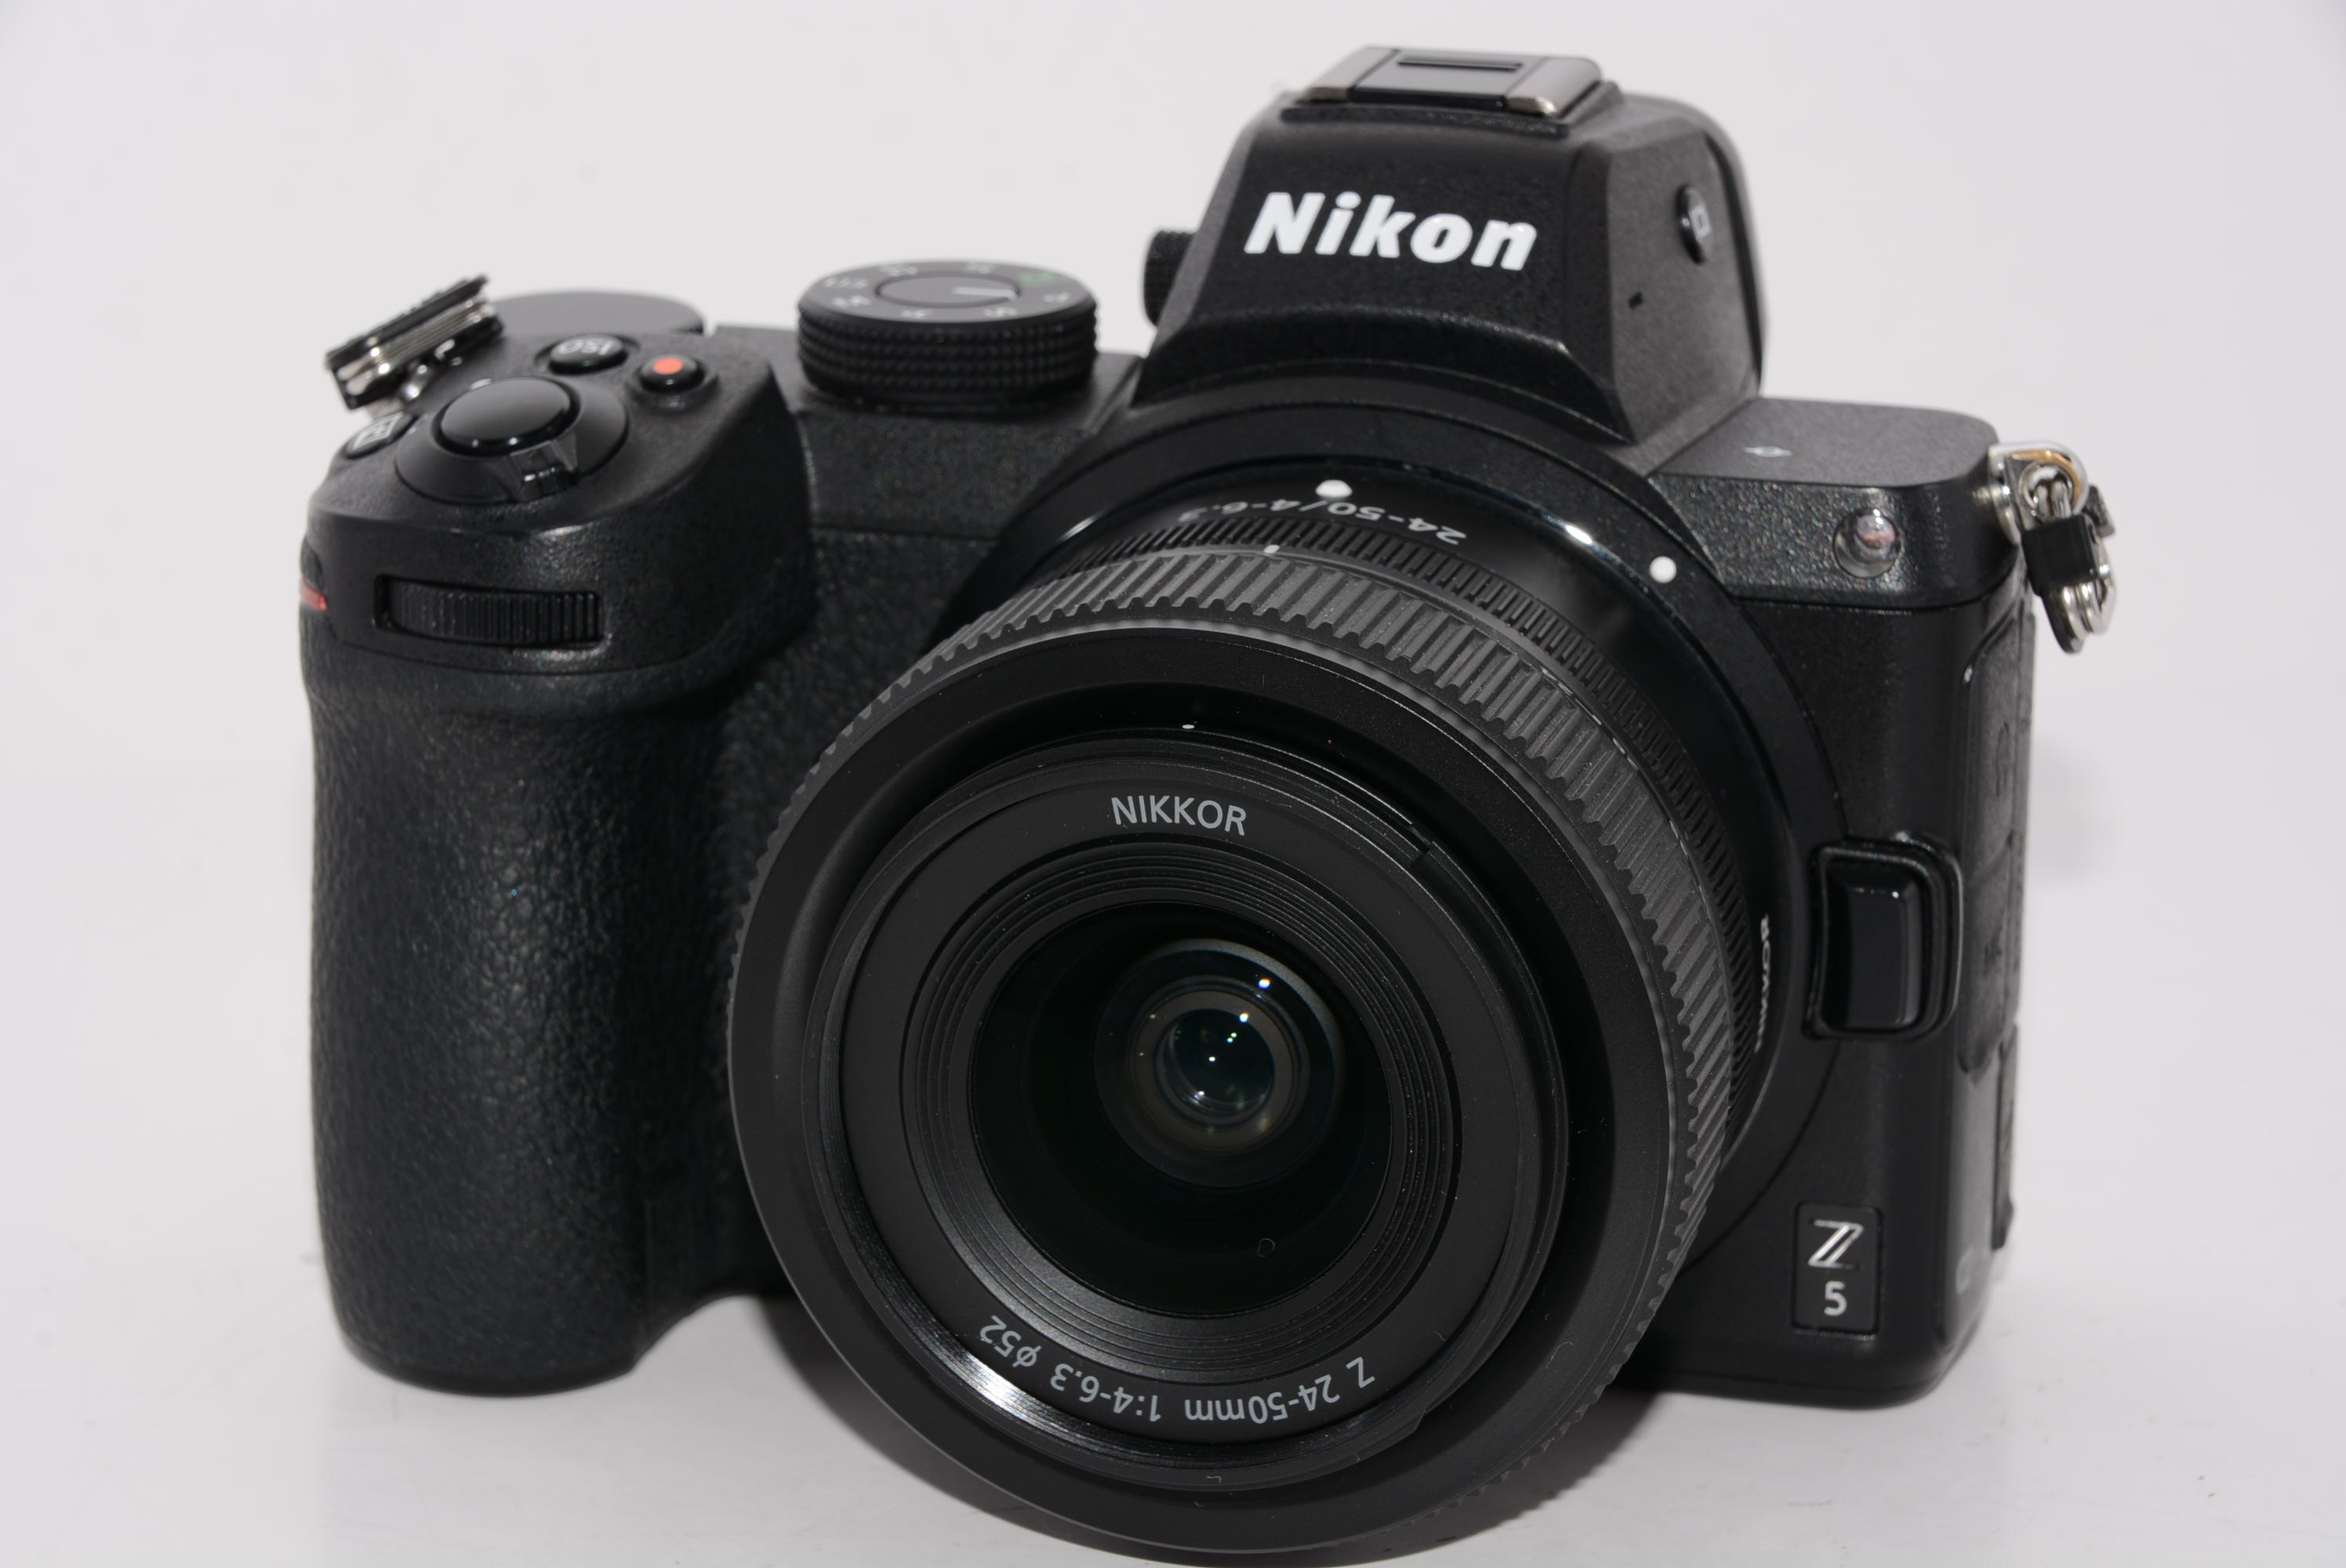 Nikon ミラーレス一眼カメラ Z5 レンズキット NIKKOR Z 24-50mm f 4-6.3 付属 Z5LK24-50 ブラック